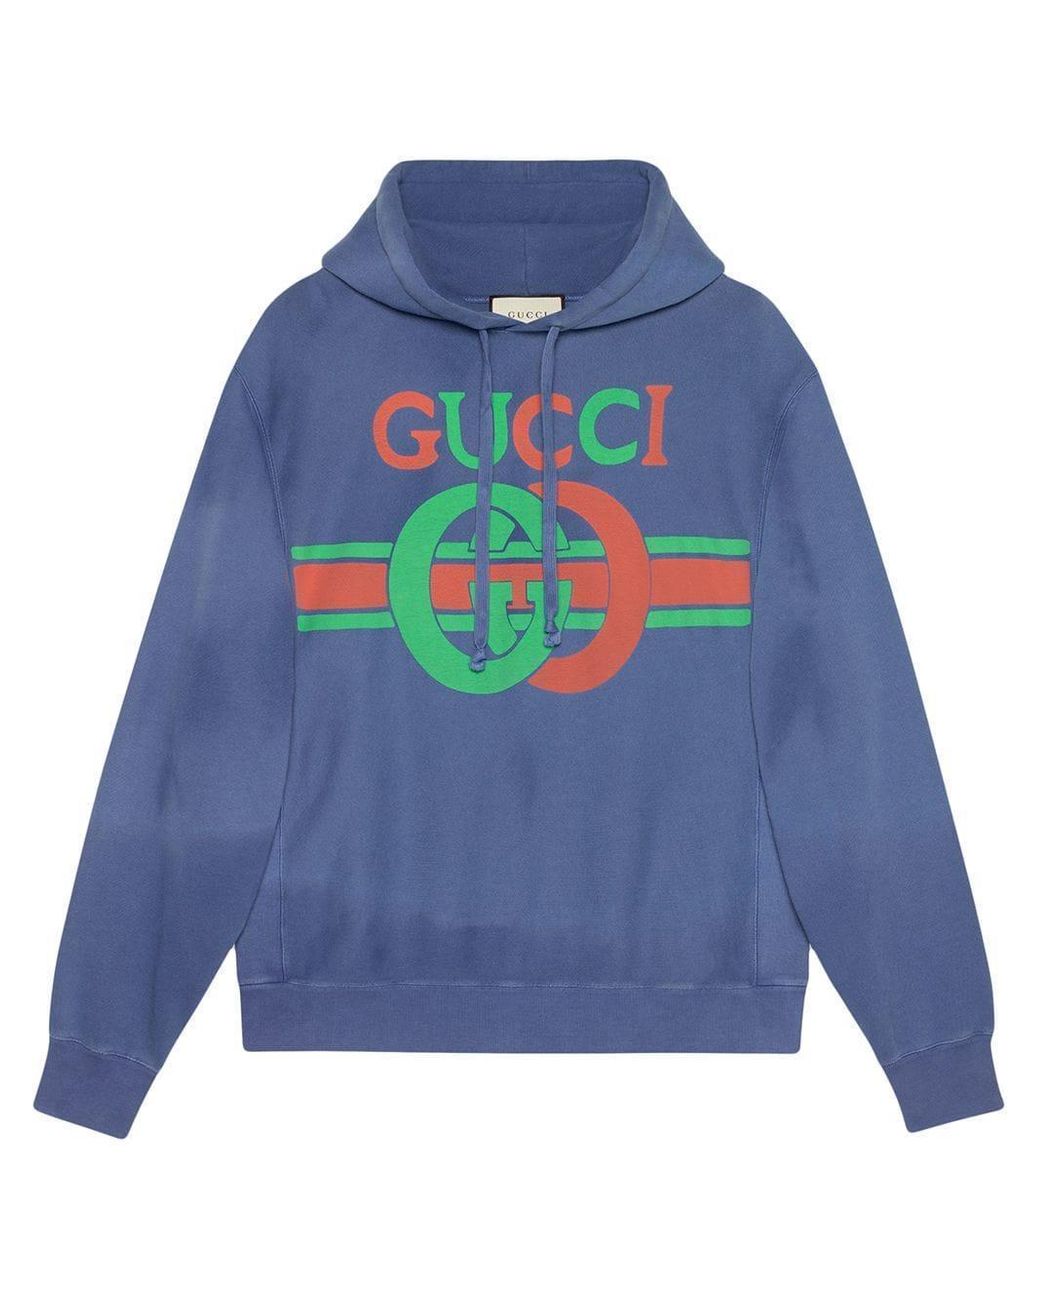 Gucci Wool Sweatshirt With Interlocking G Print in Blue for Men - Lyst